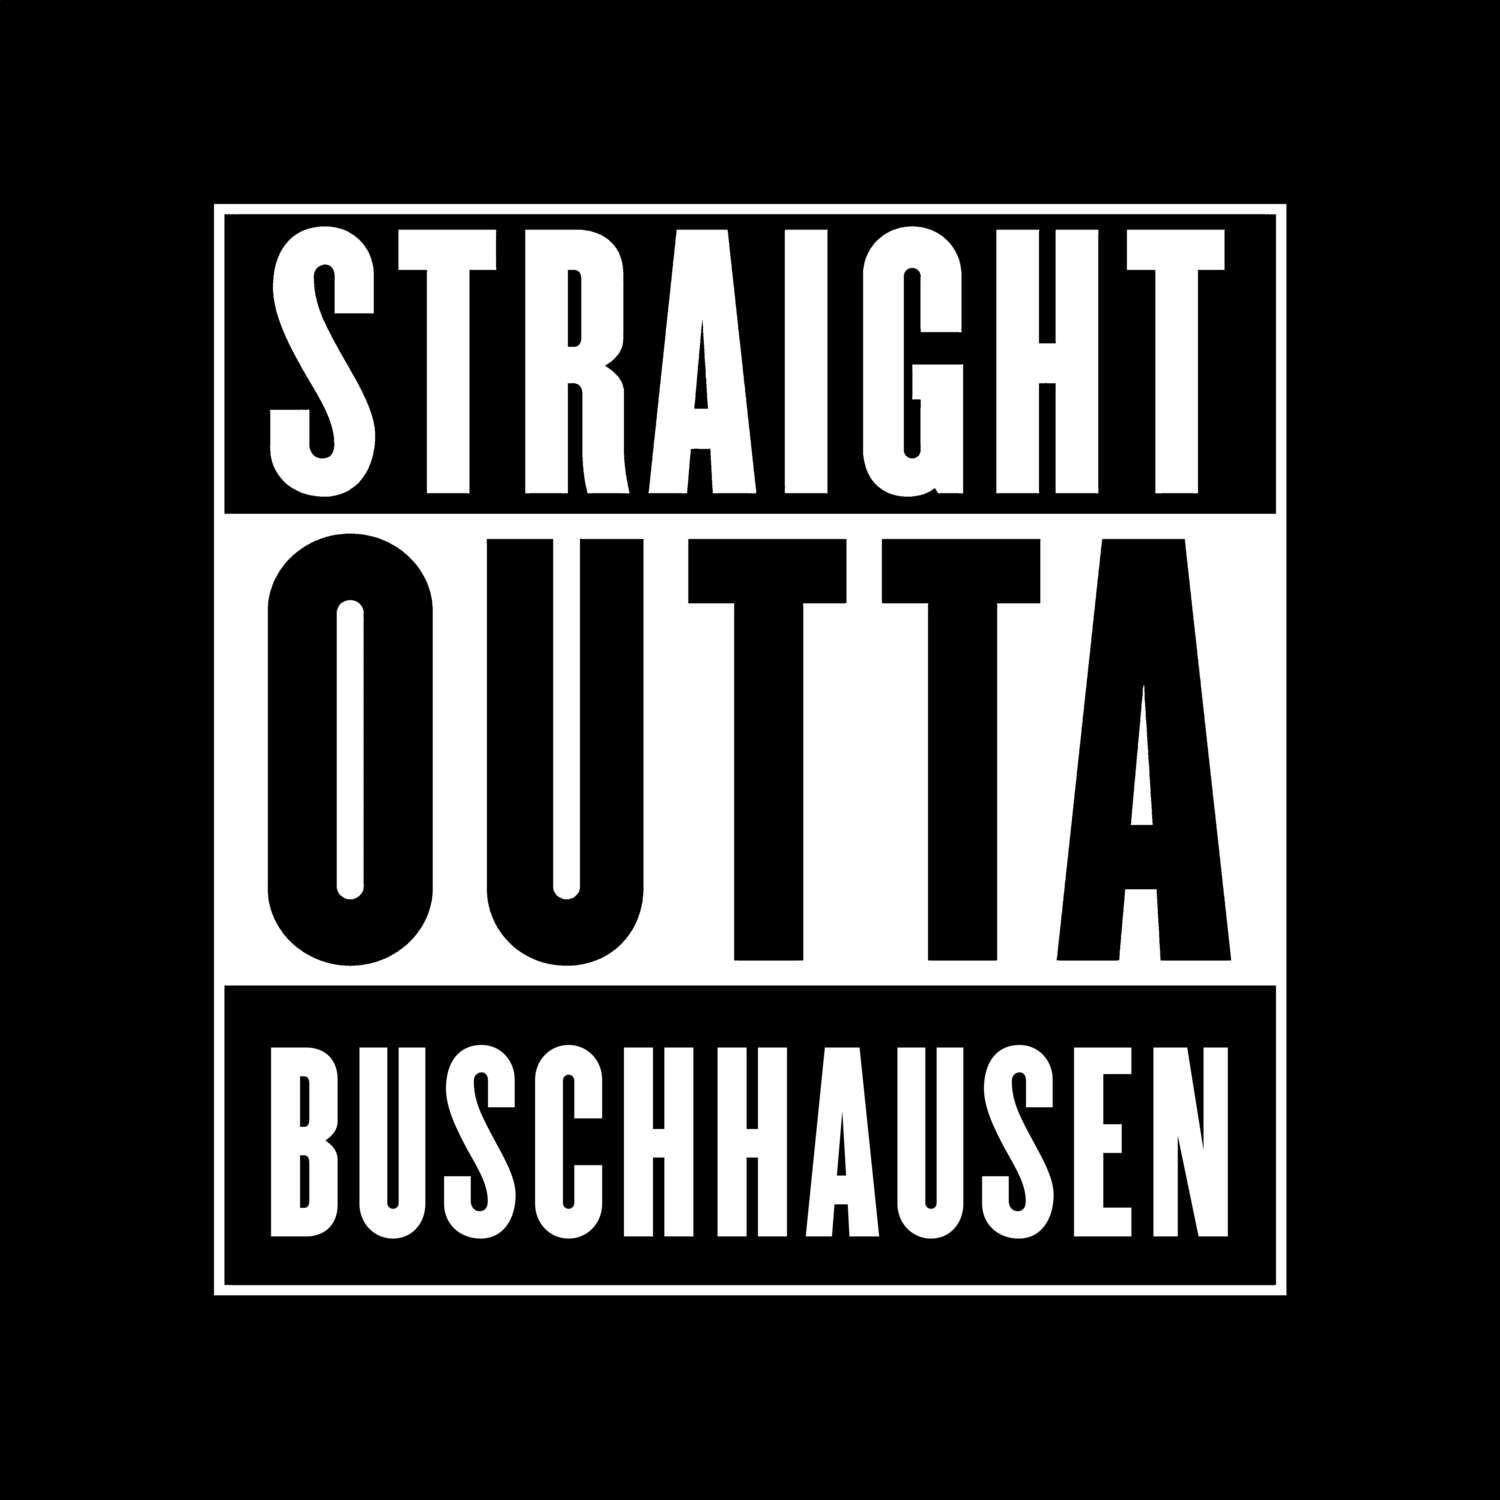 Buschhausen T-Shirt »Straight Outta«